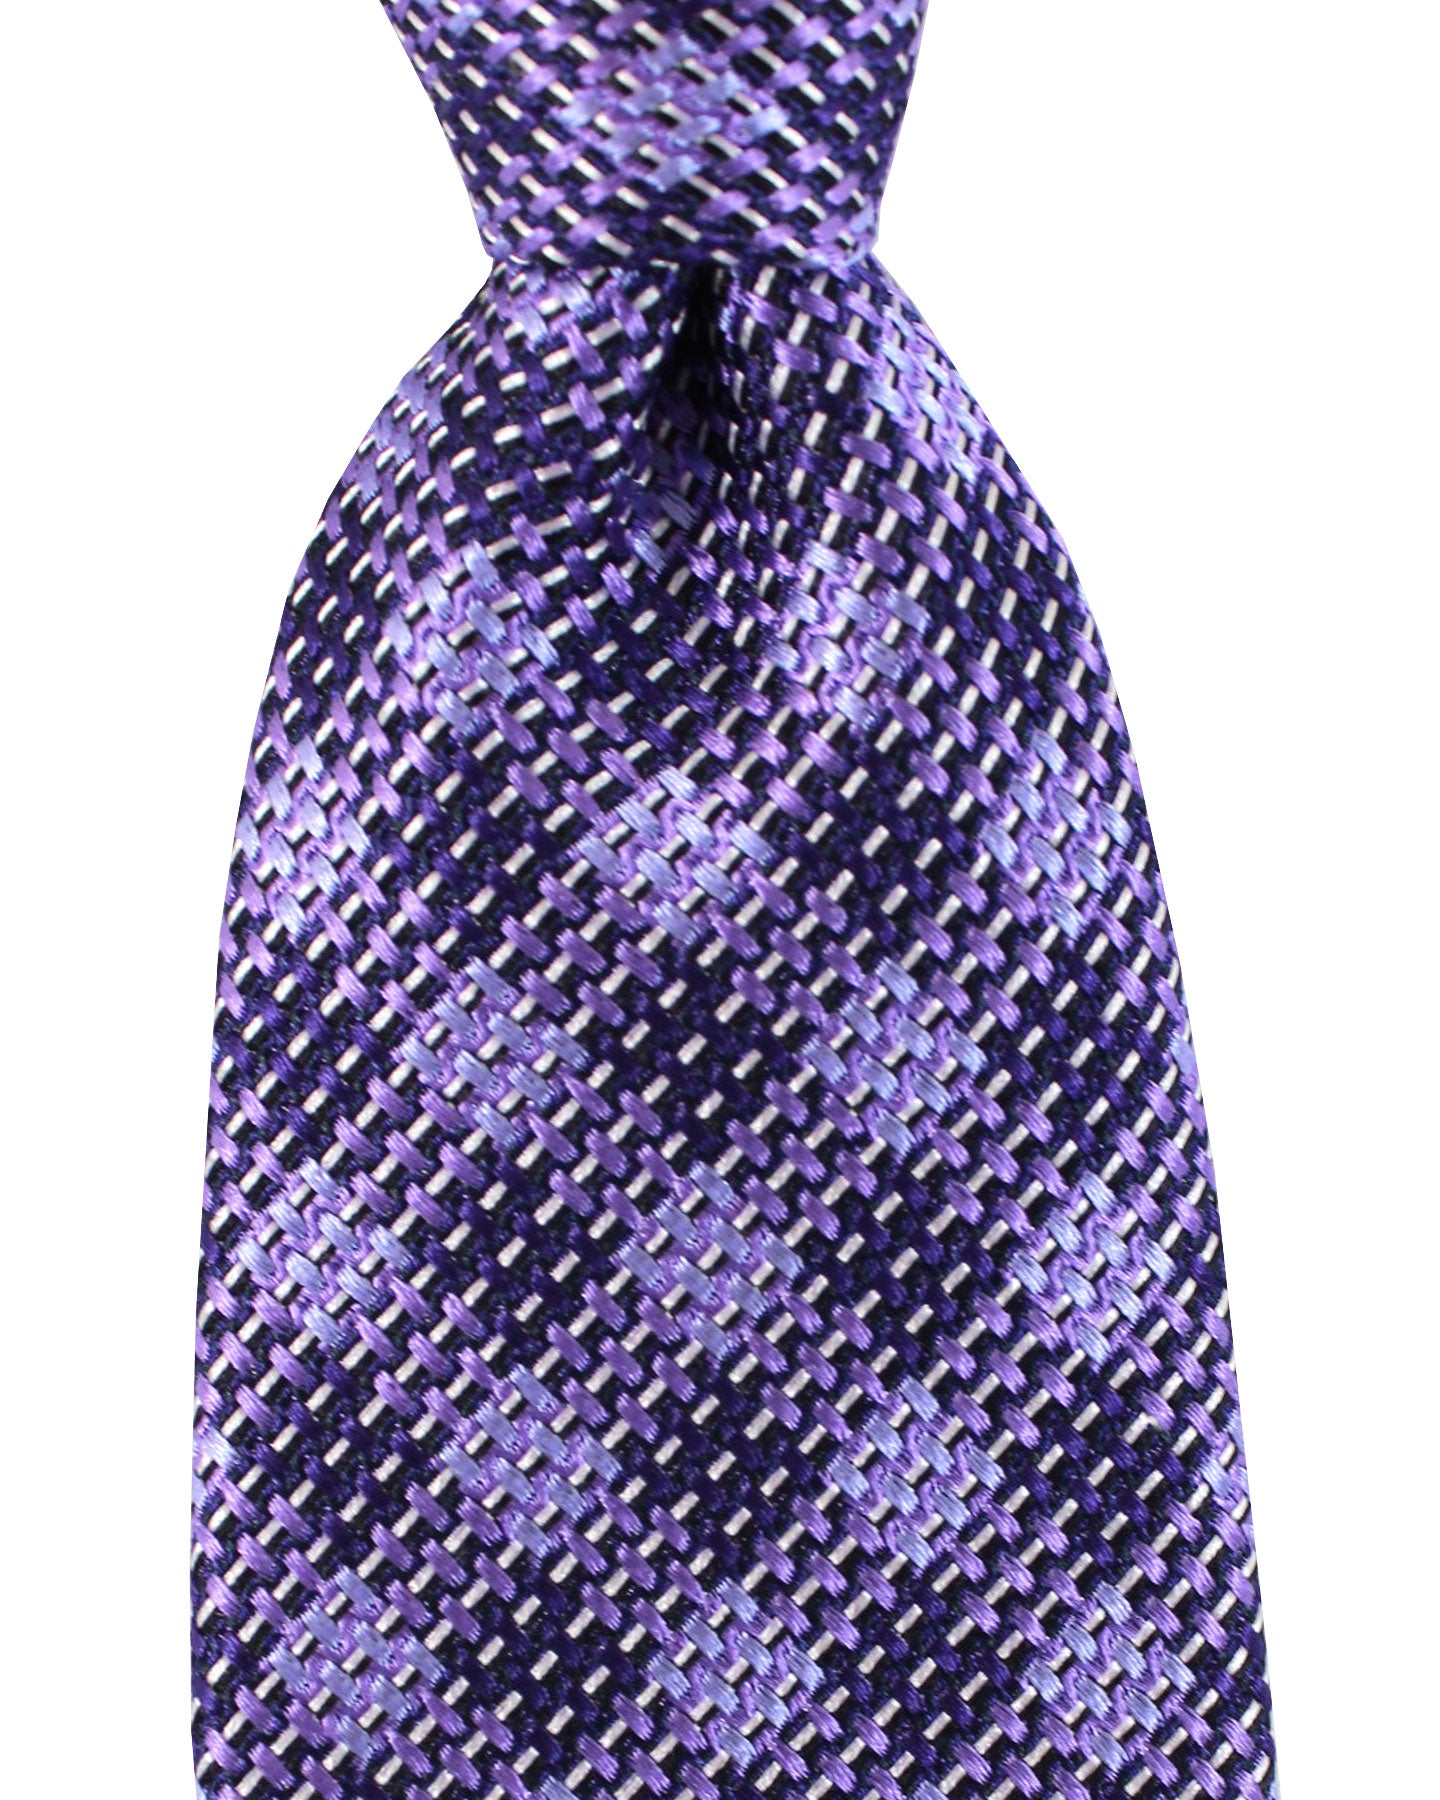 Tom Ford Tie Purple Black Stripes Gingham